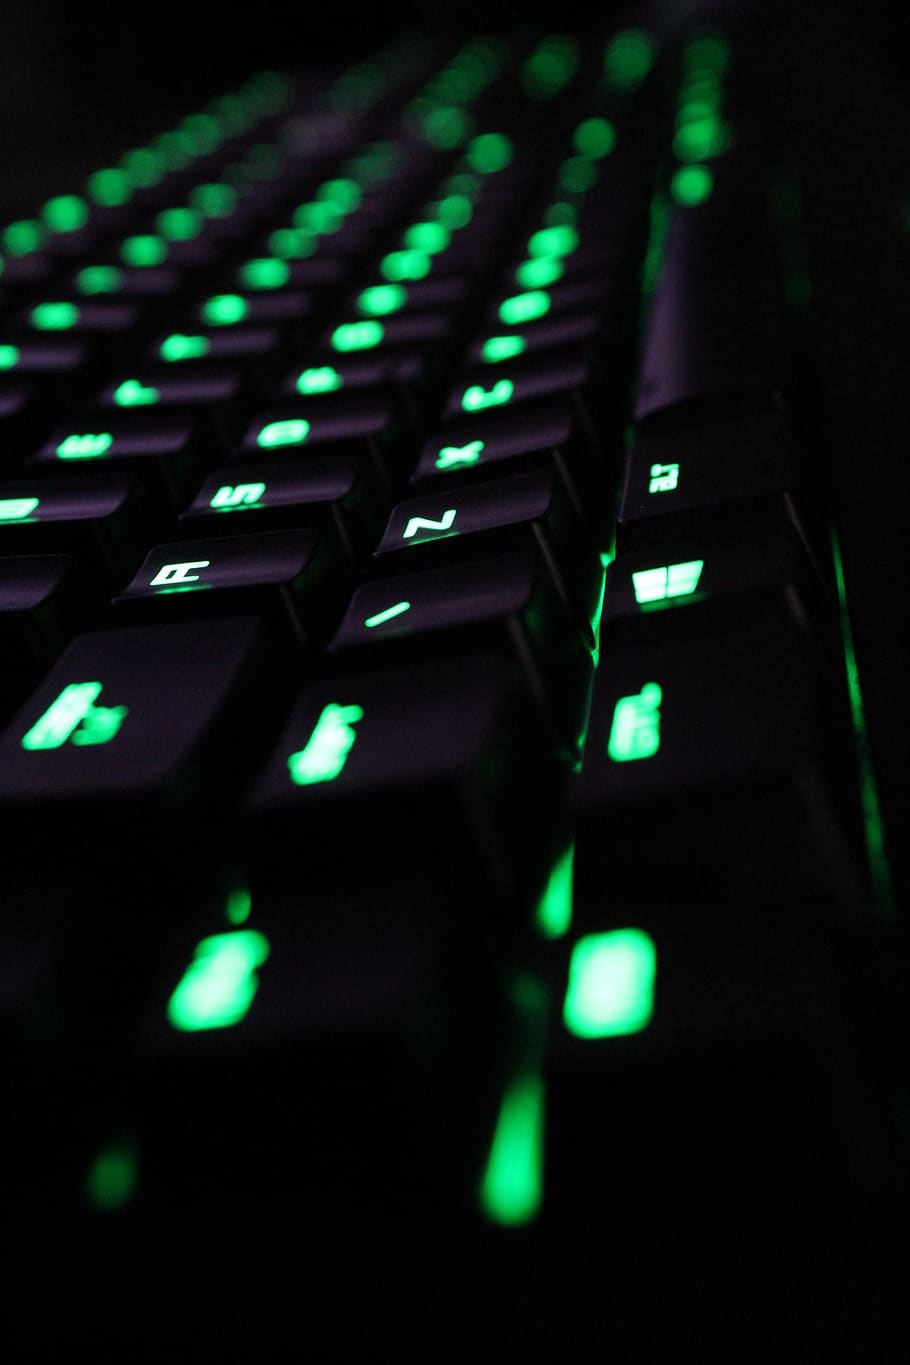 keyboard, computer, razer, green, dark, technology, computer equipment, indoors, communication, close-up